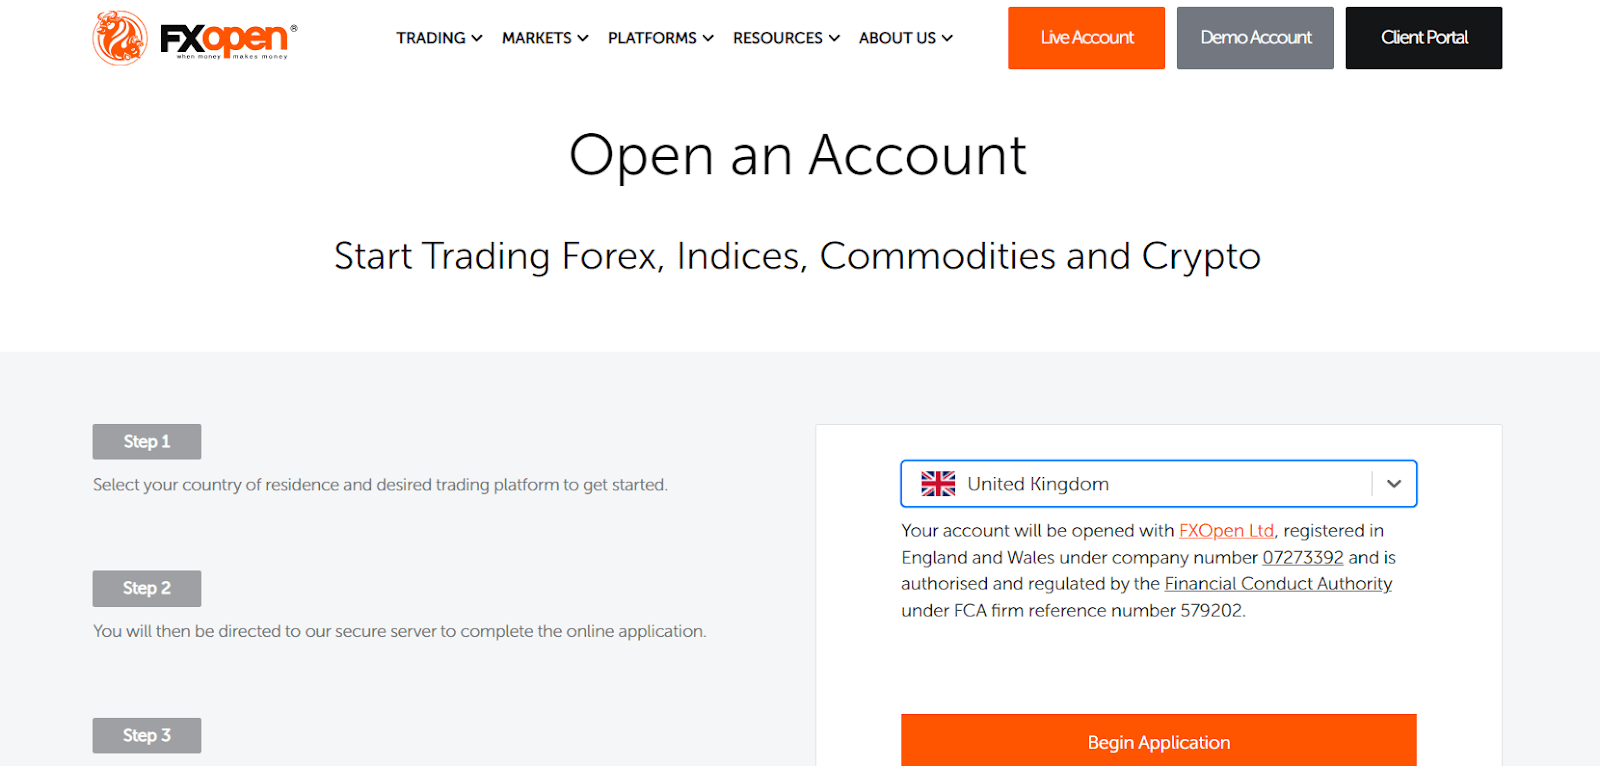 Review of FXOpen’s User Account — Open an account